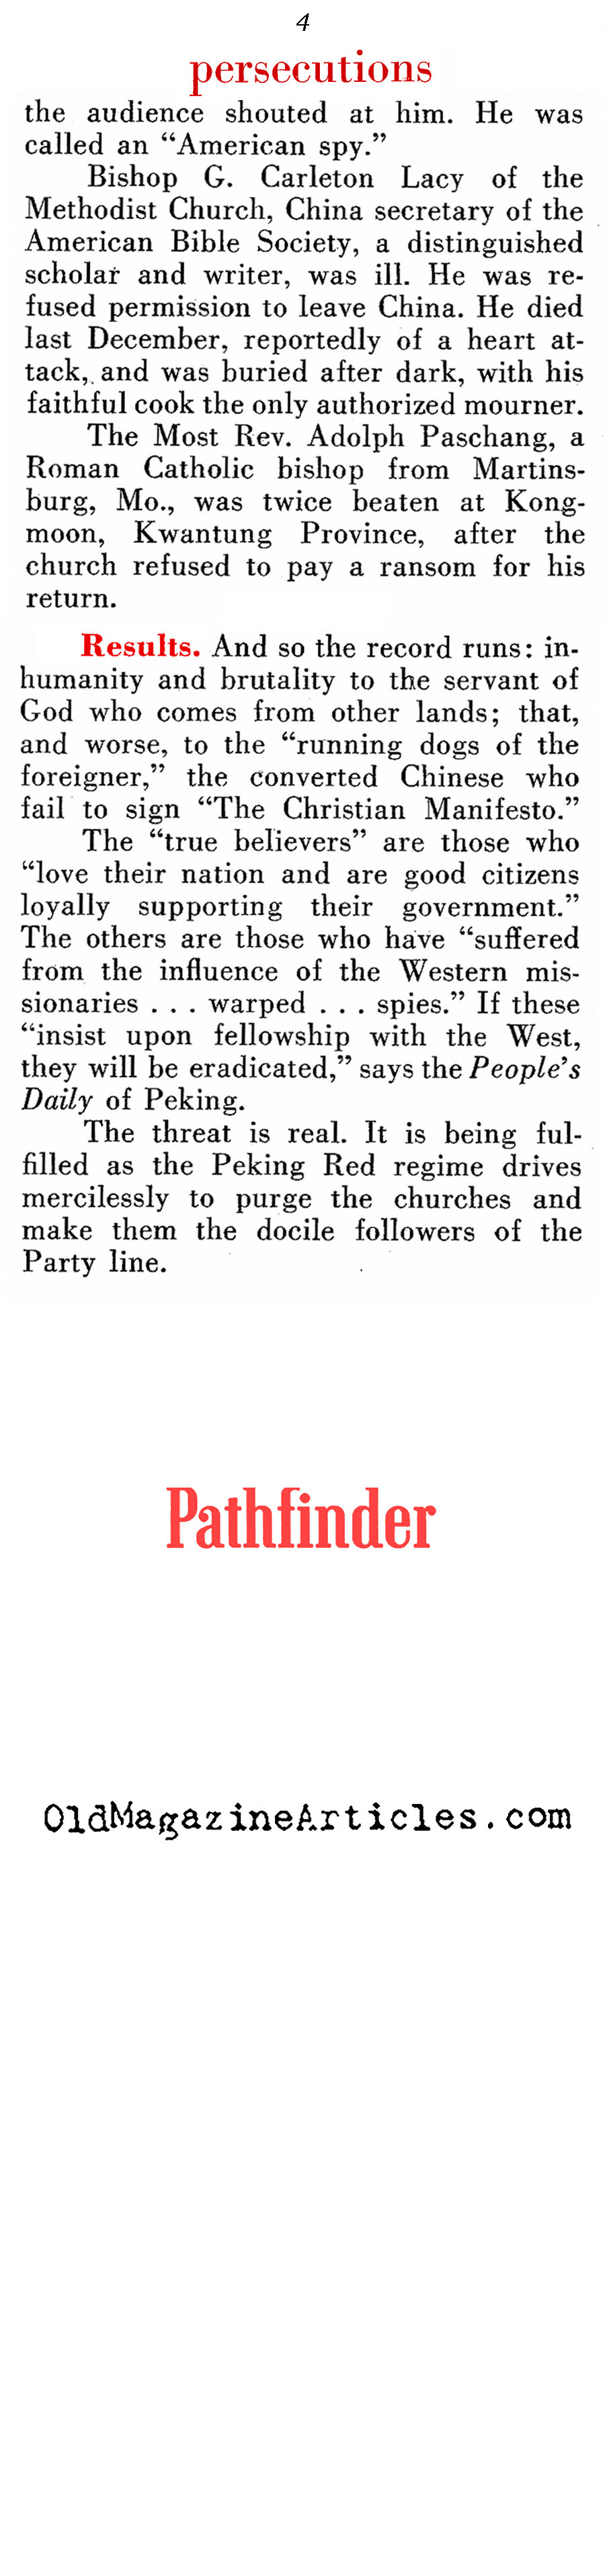 The Lot of Chinese Christians (Pathfinder Magazine, 1952)